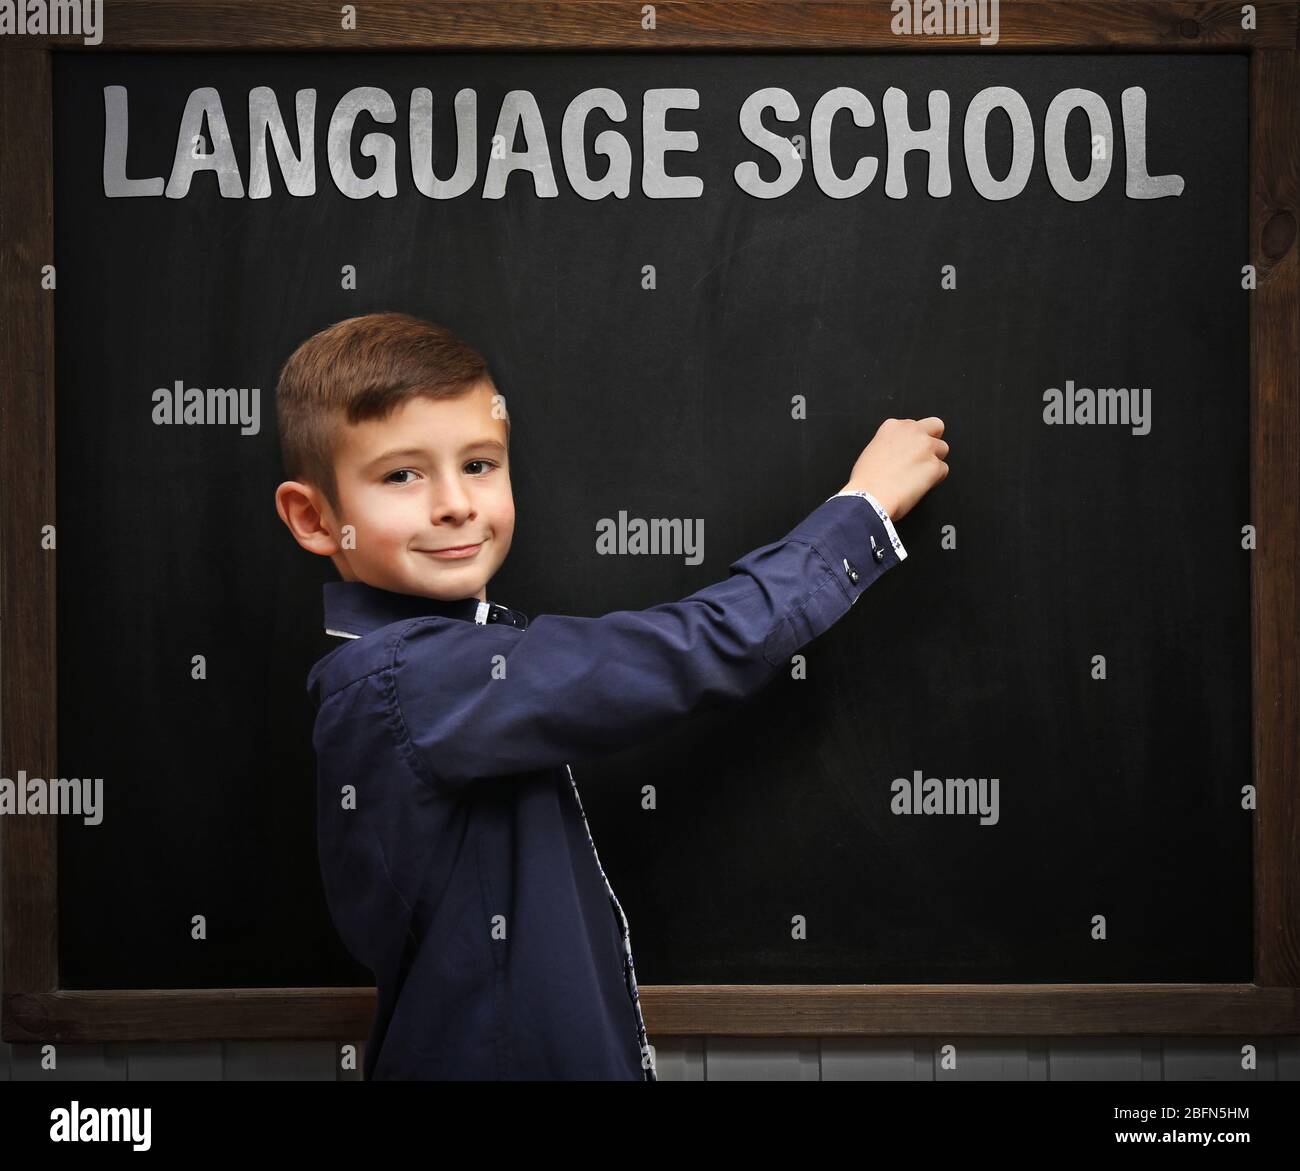 Language school concept with schoolboy Stock Photo